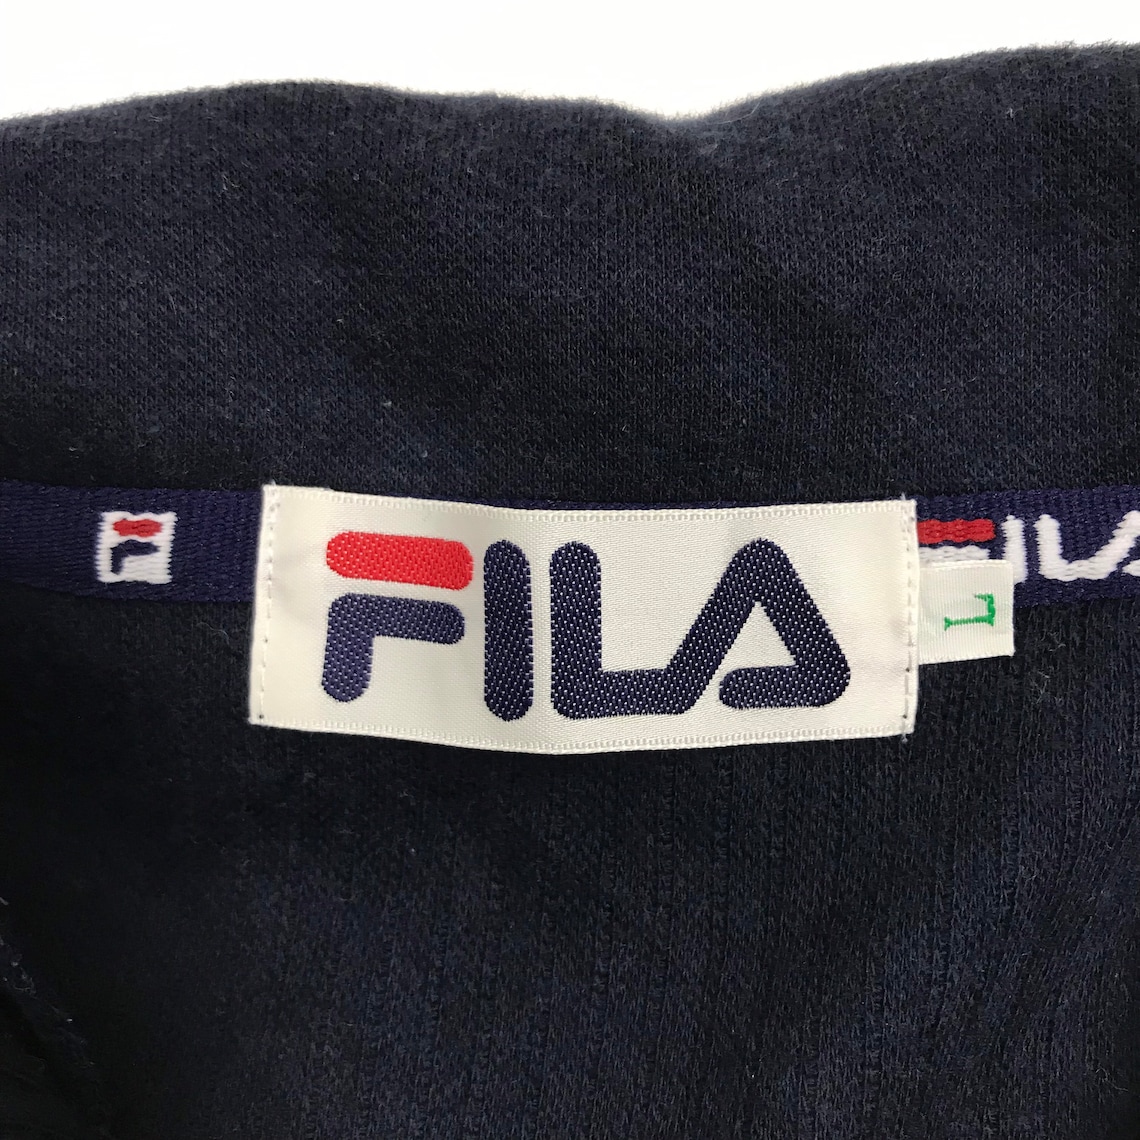 FILA Biella Italia Half Zip Sweatshirt 272 | Etsy